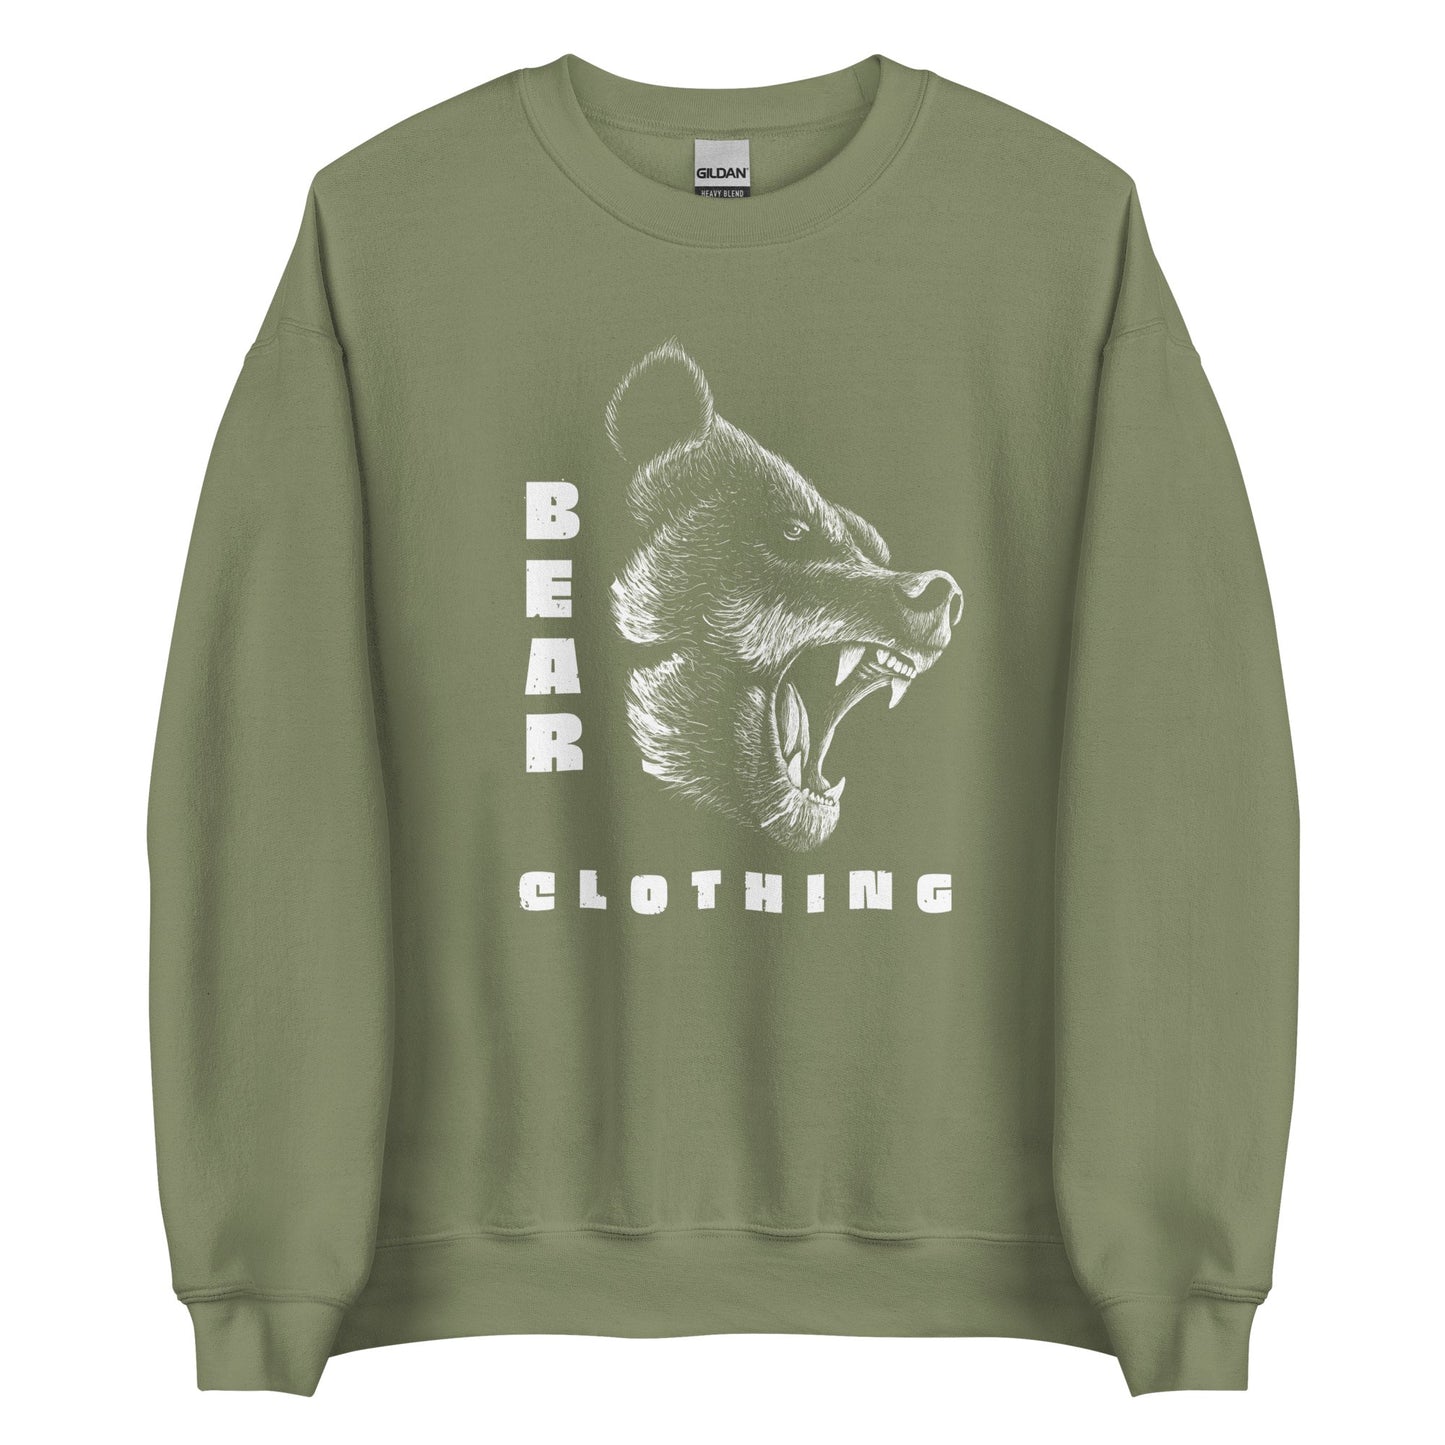 Exclusive BEAR Sweatshirt Designed by Bear Clothing